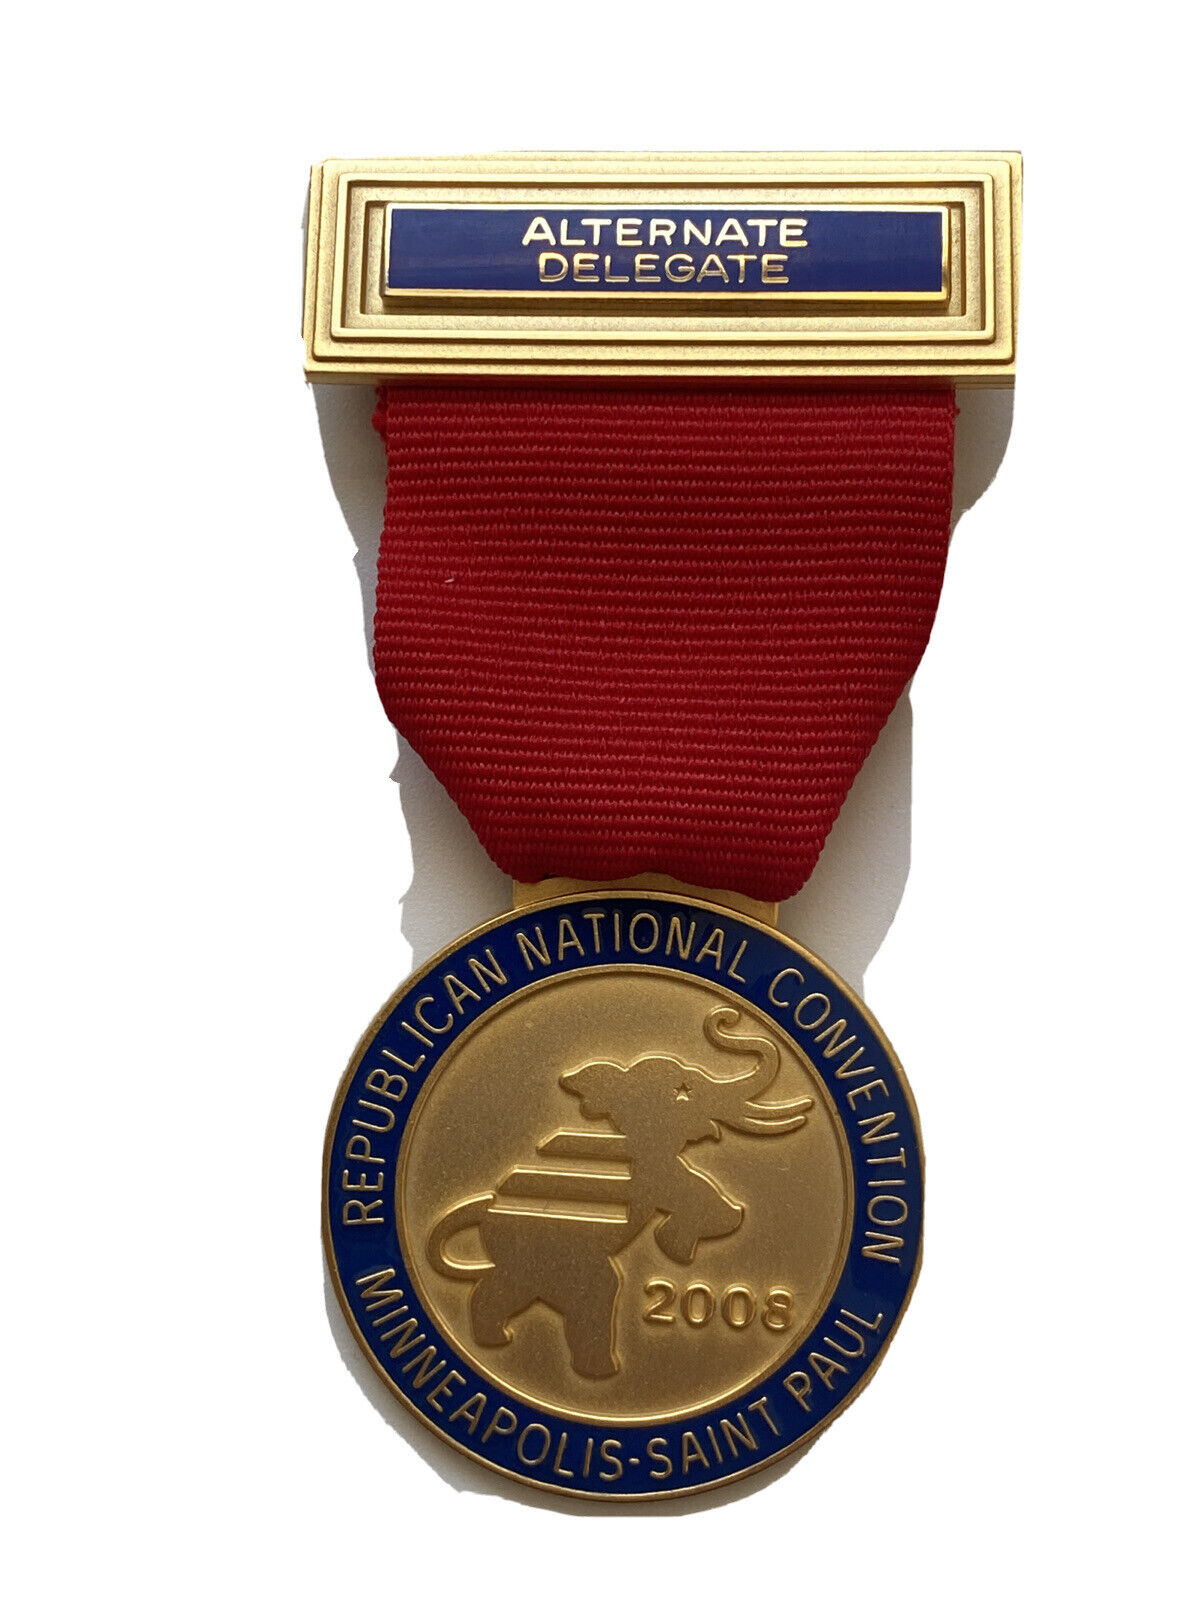 2008 Republican National Convention Alternate Delegate Badge John McCain Medal